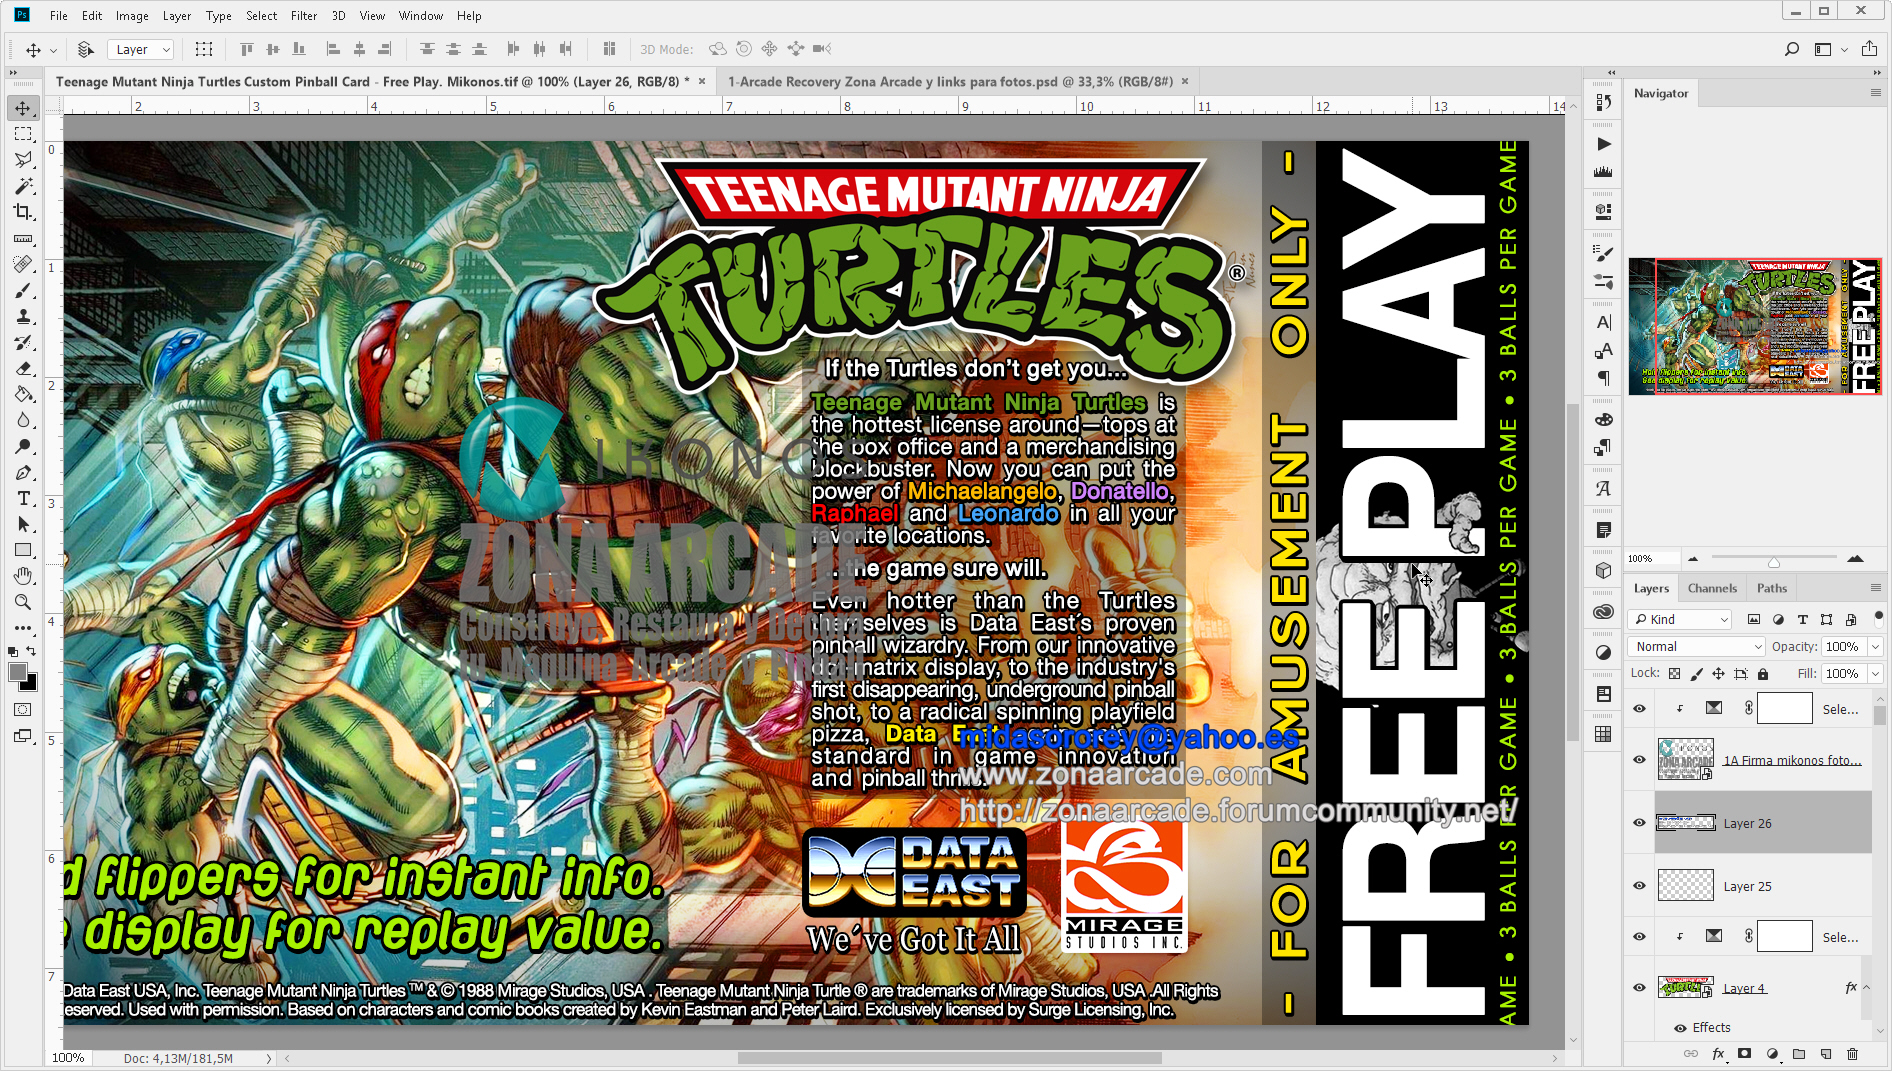 Teenage-Mutant-Ninja-Turtles-Pinball-Card-Customized-Free-Play2-Mikonos2